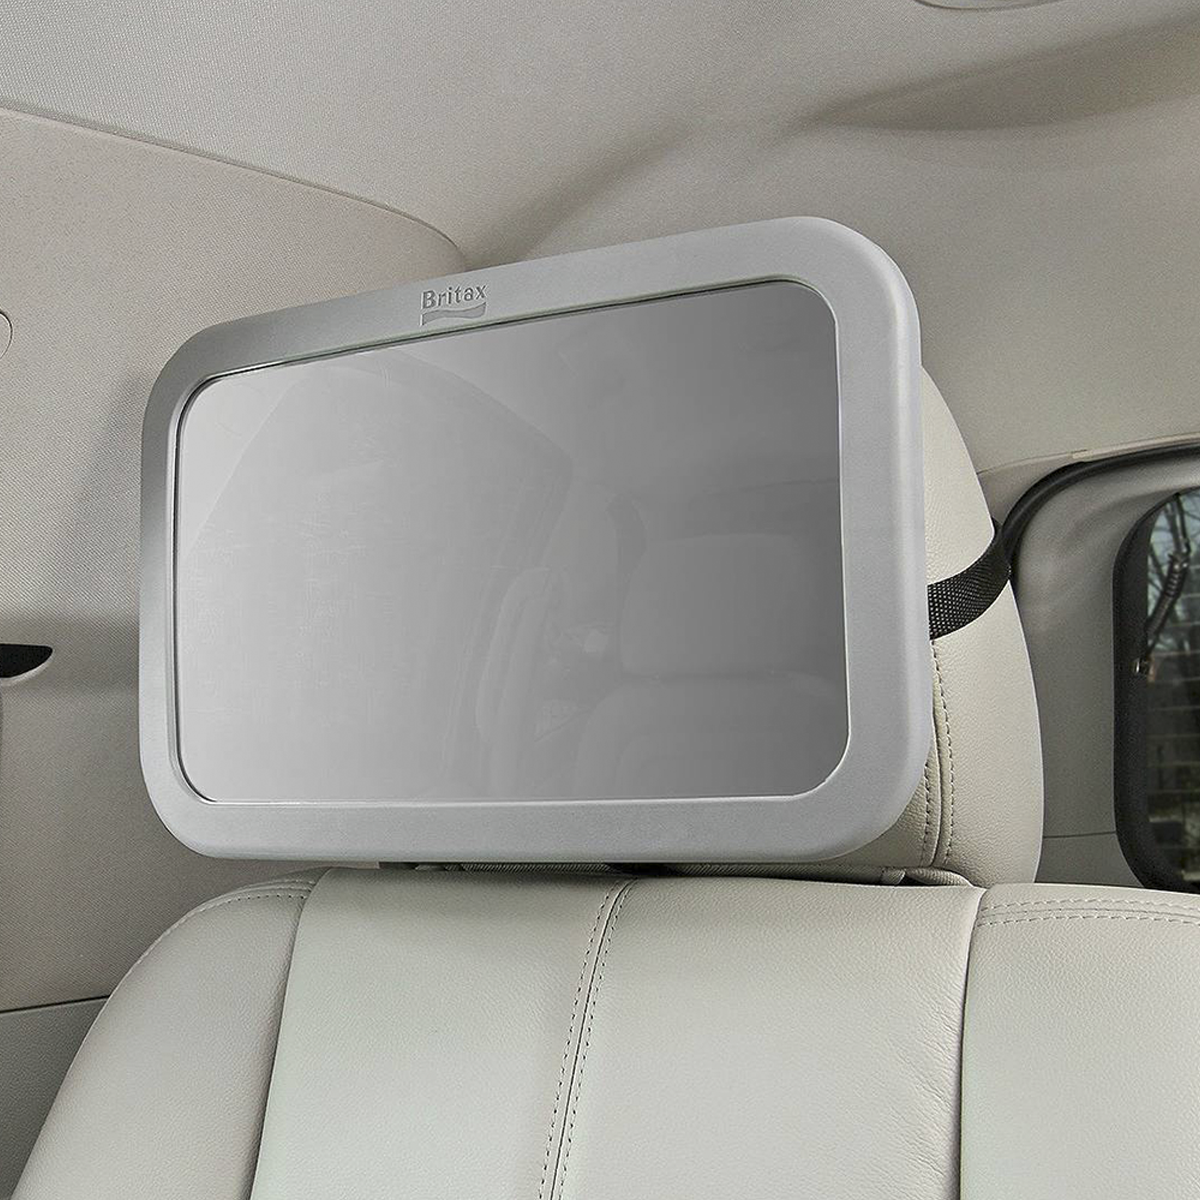 britax seat mirror